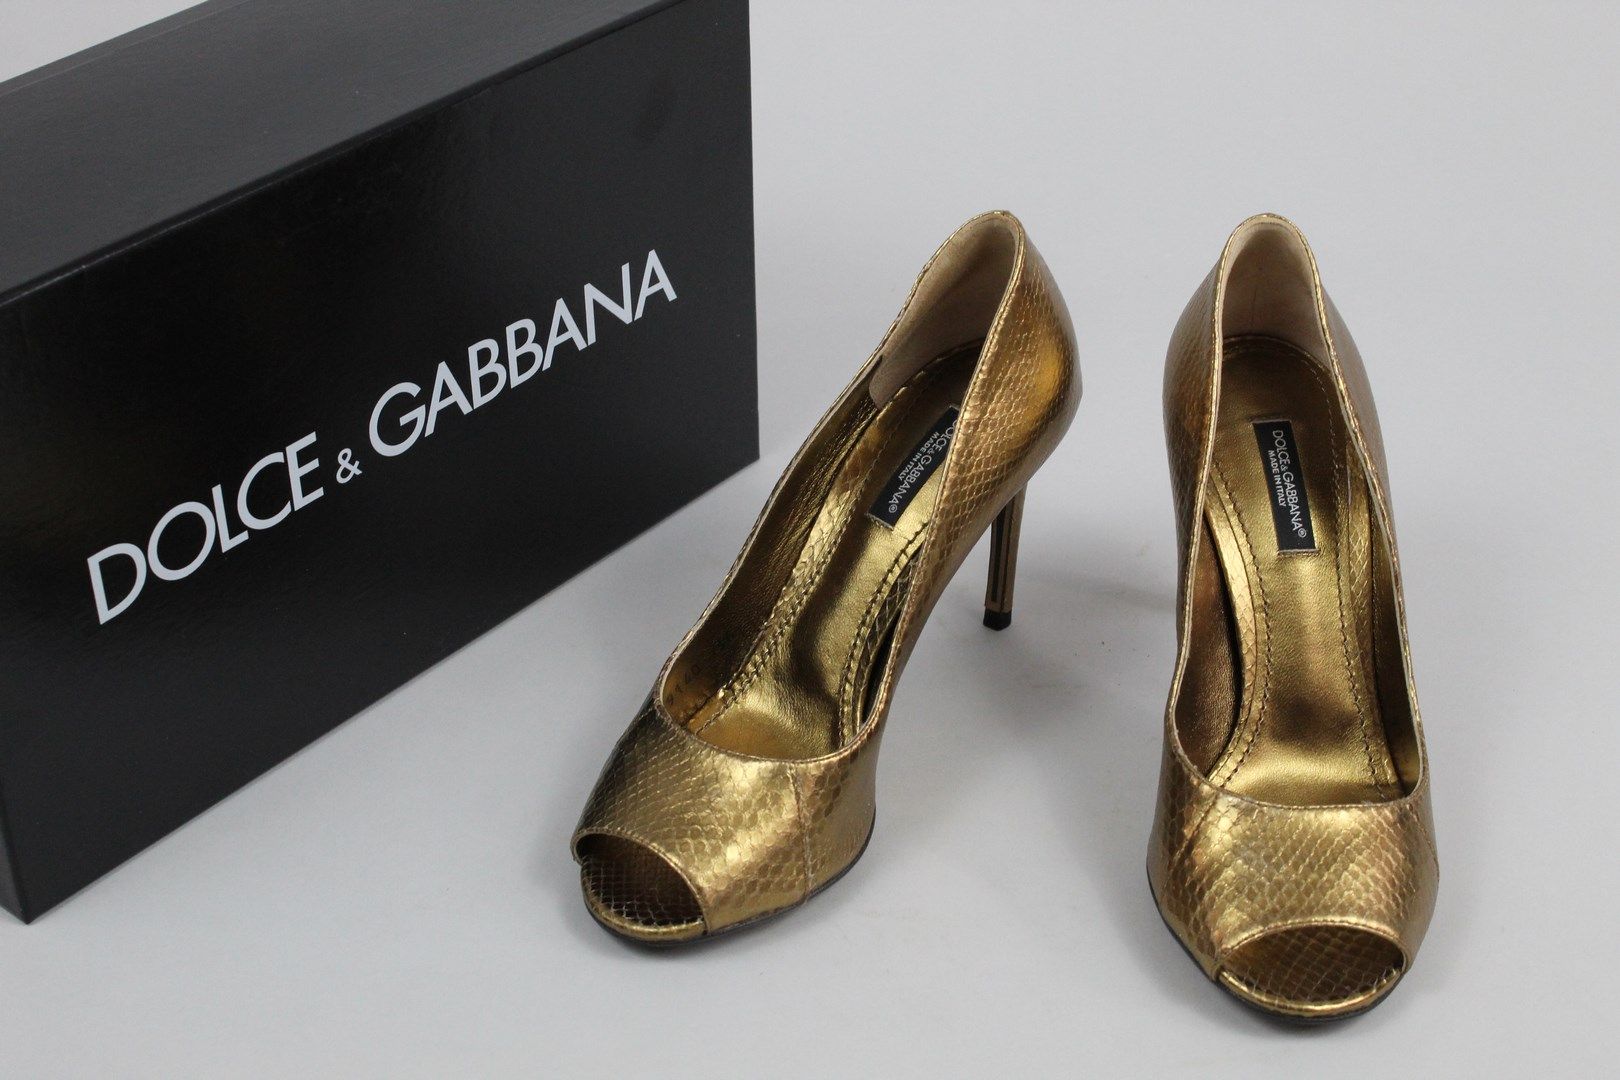 Null DOLCE & GABBANA



一双金色高跟鞋，蟒蛇效果的露趾。



尺寸：36



鞋跟高度：8.5厘米



有盒子。